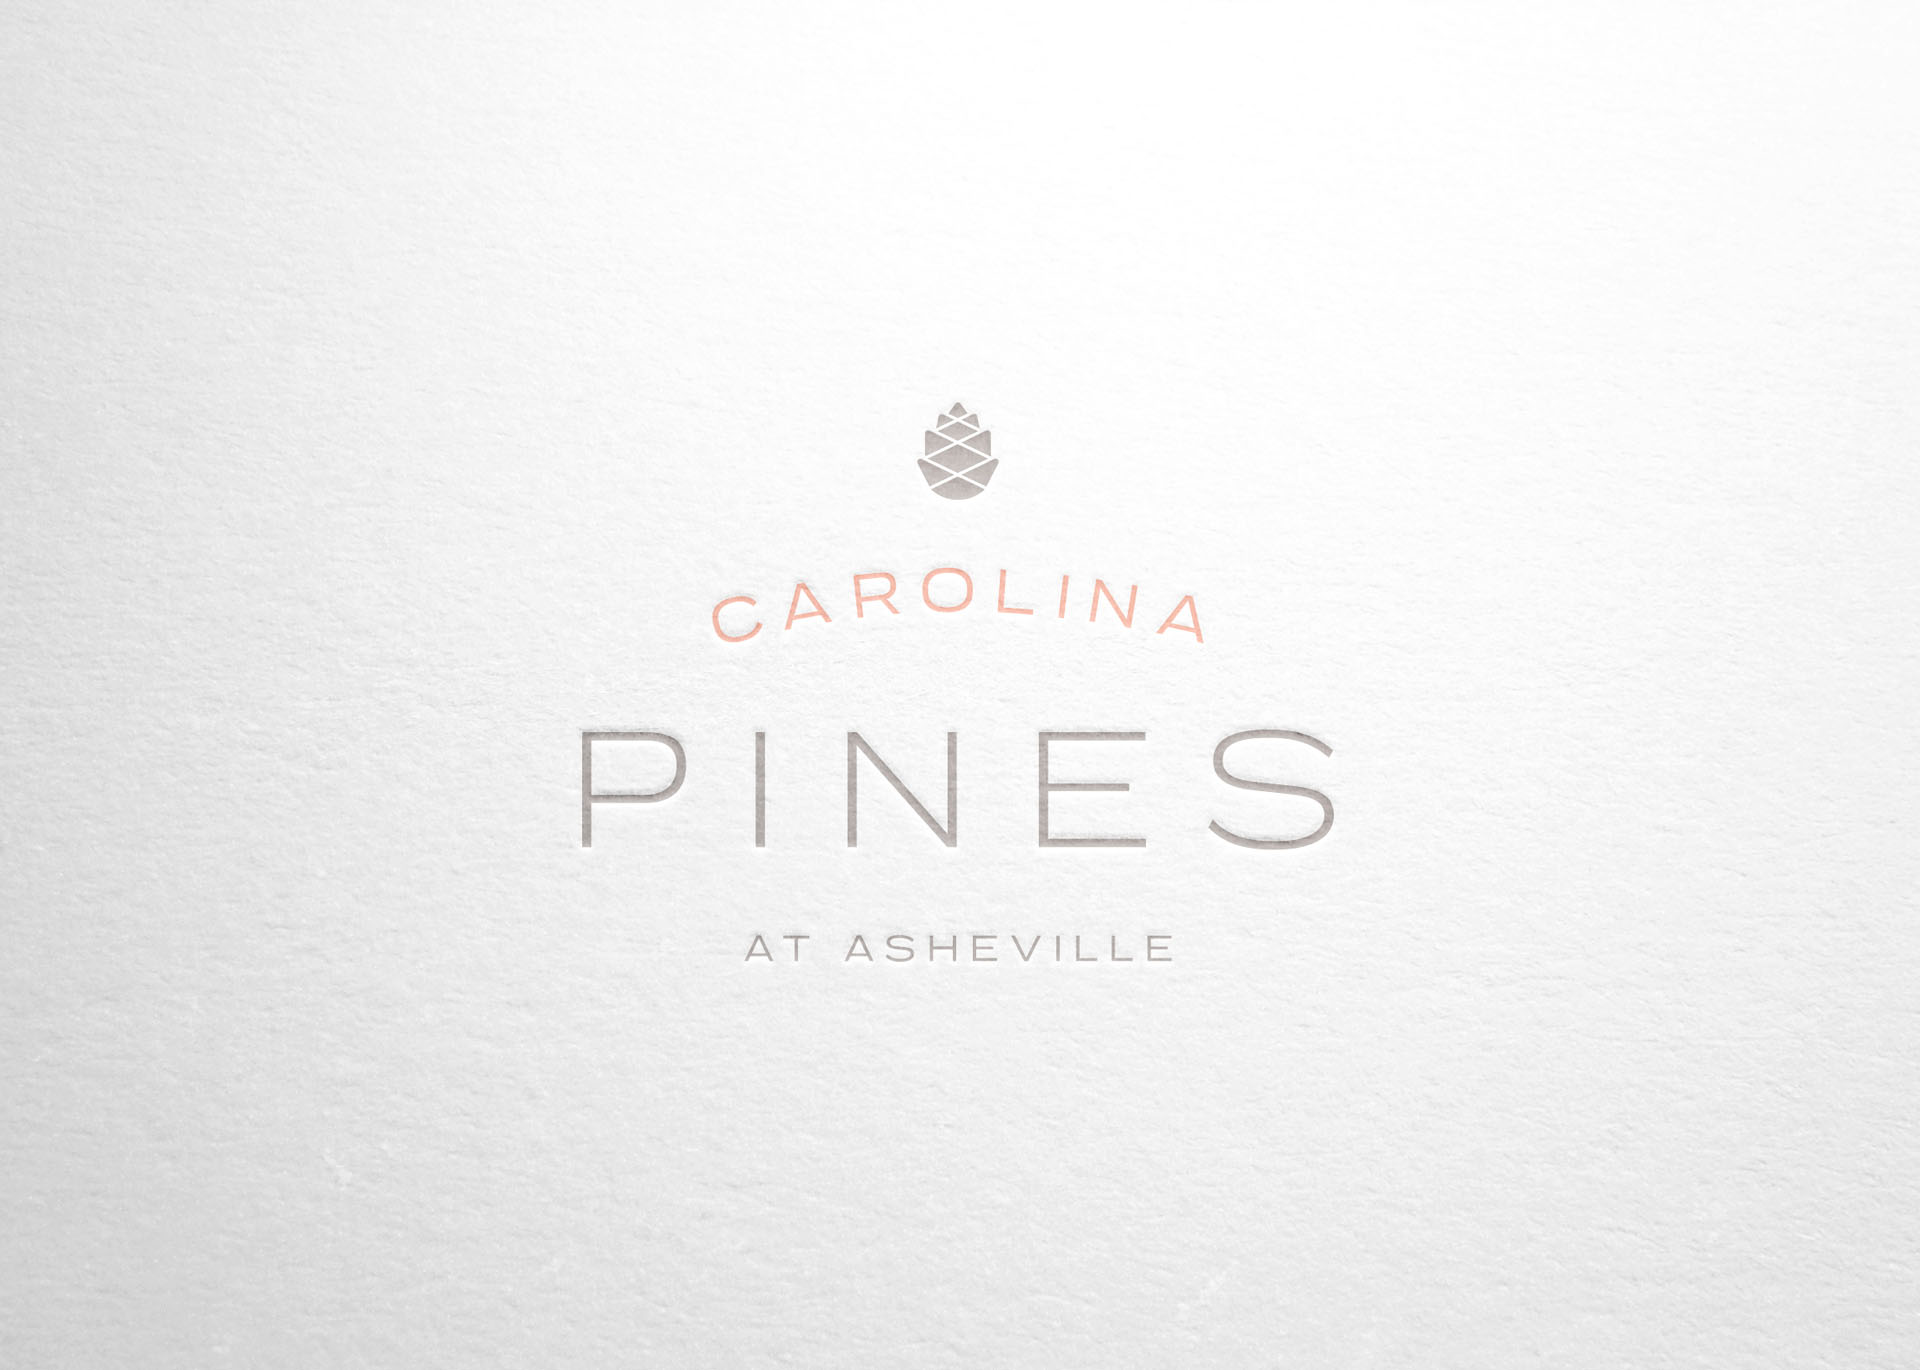 Carolina Pines at Asheville